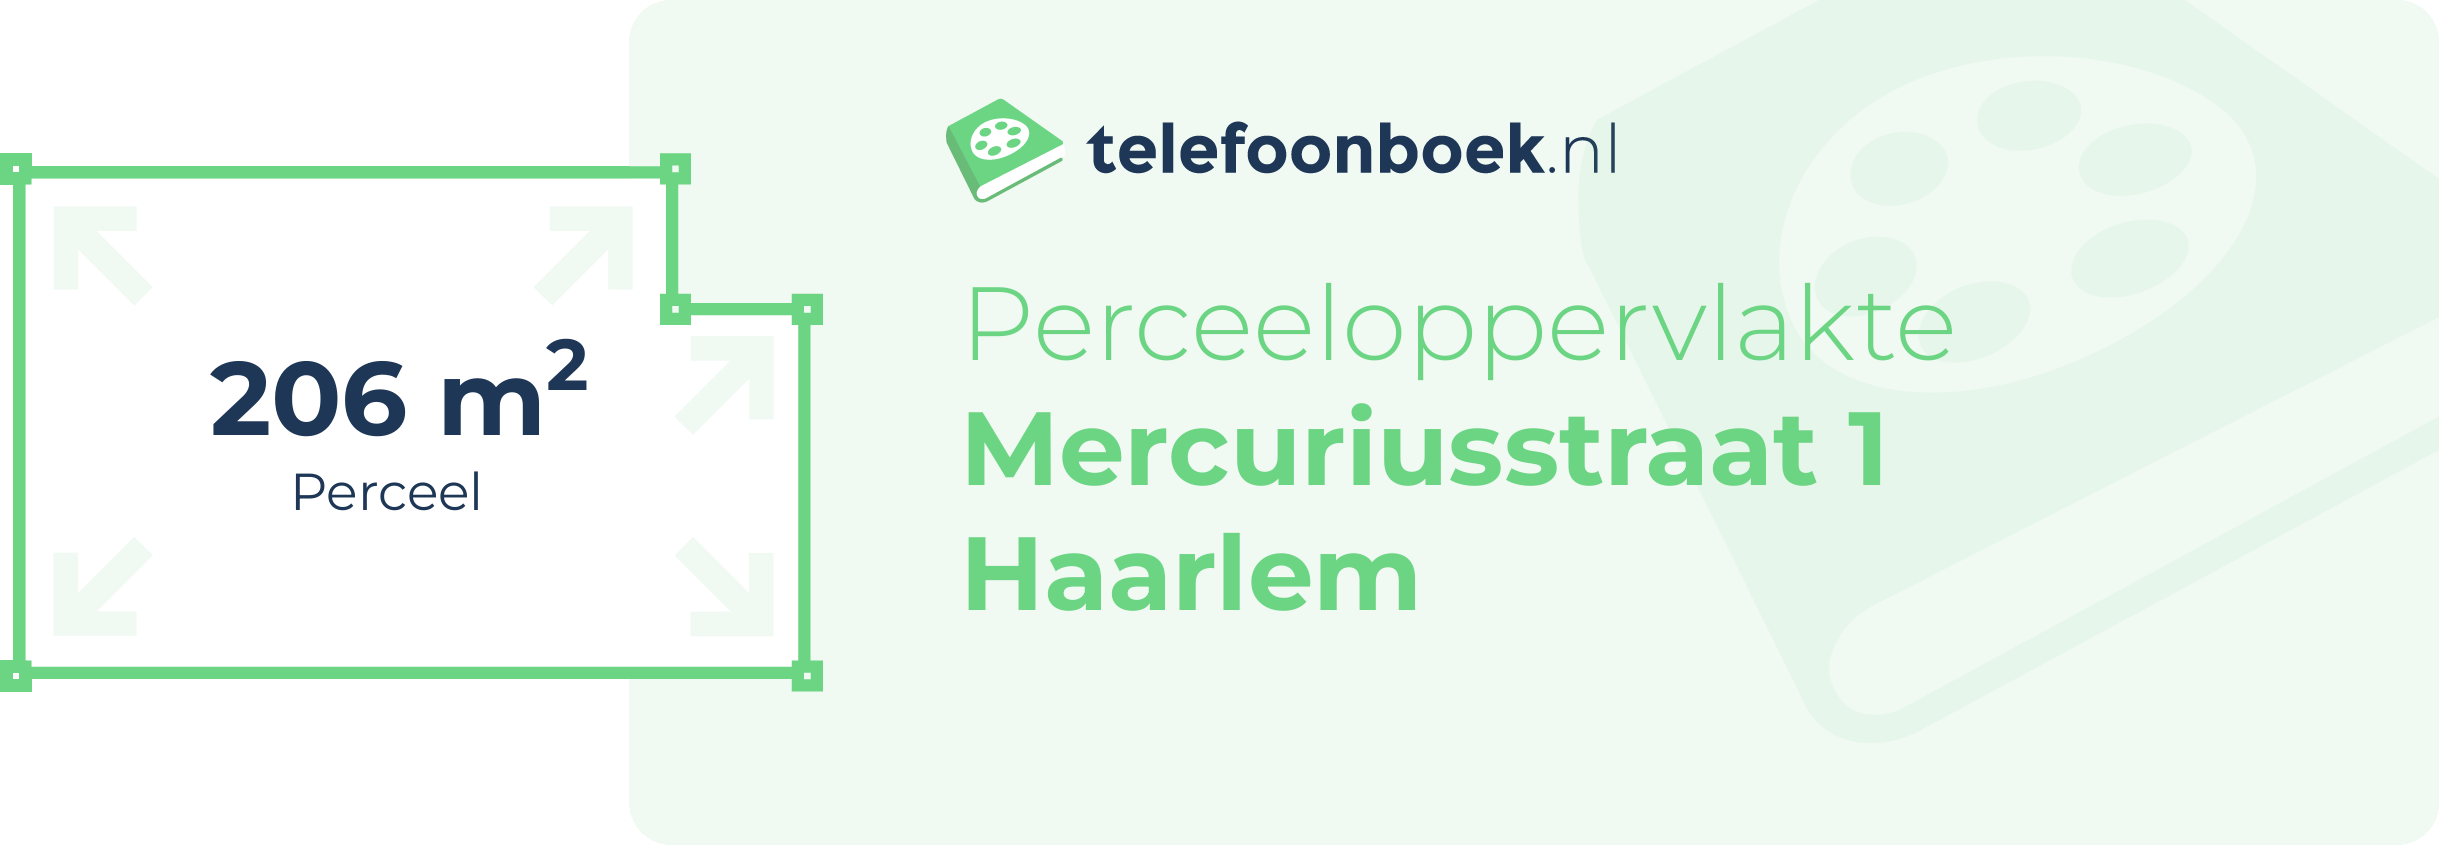 Perceeloppervlakte Mercuriusstraat 1 Haarlem